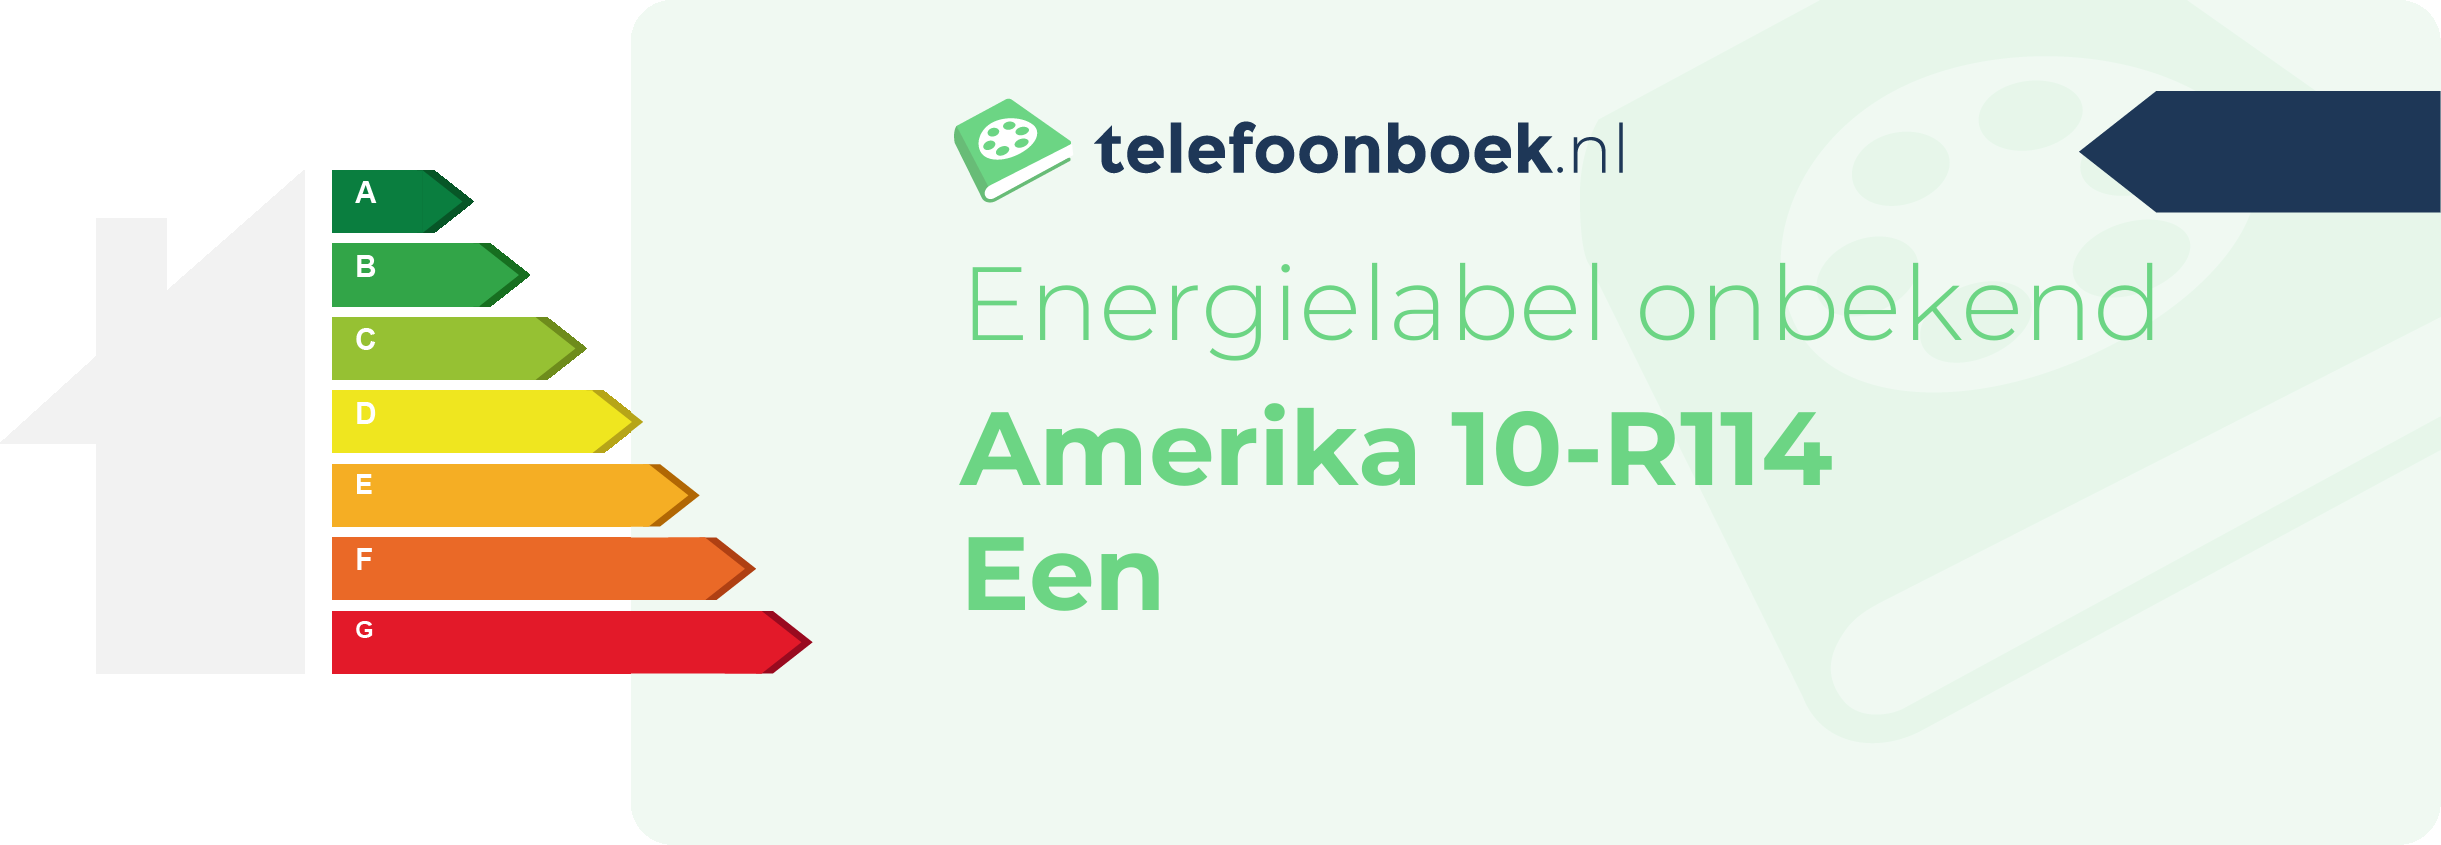 Energielabel Amerika 10-R114 Een